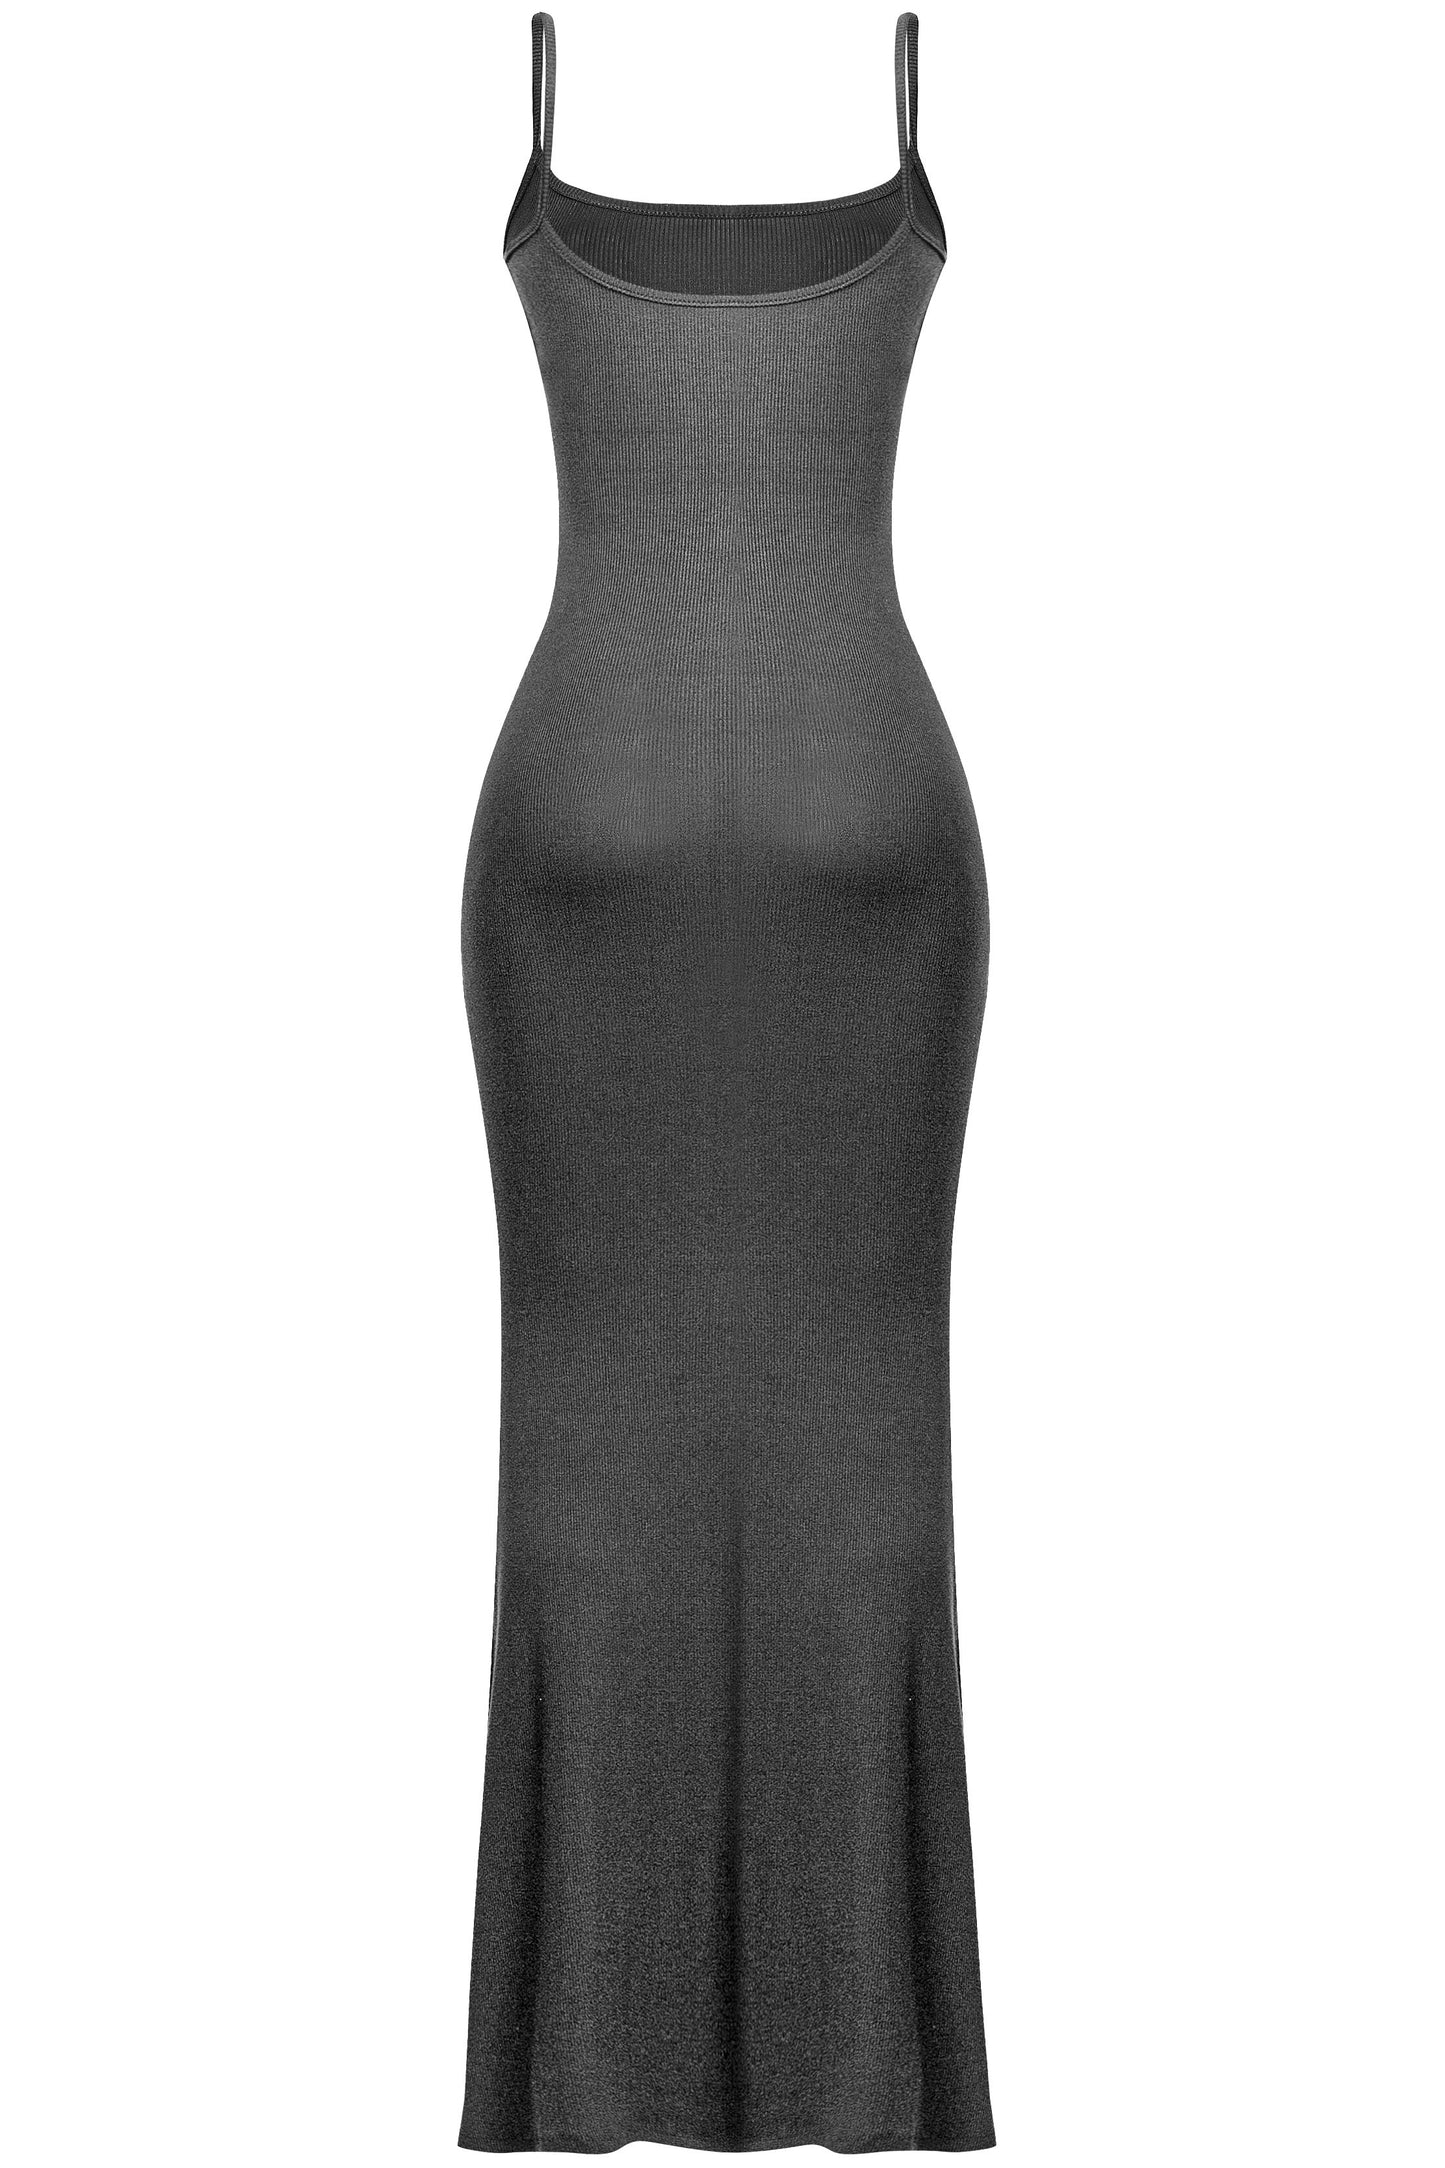 Sleeveless Ribbed Maxi Dress: Cami Straps, Stretchy, Mermaid Fit